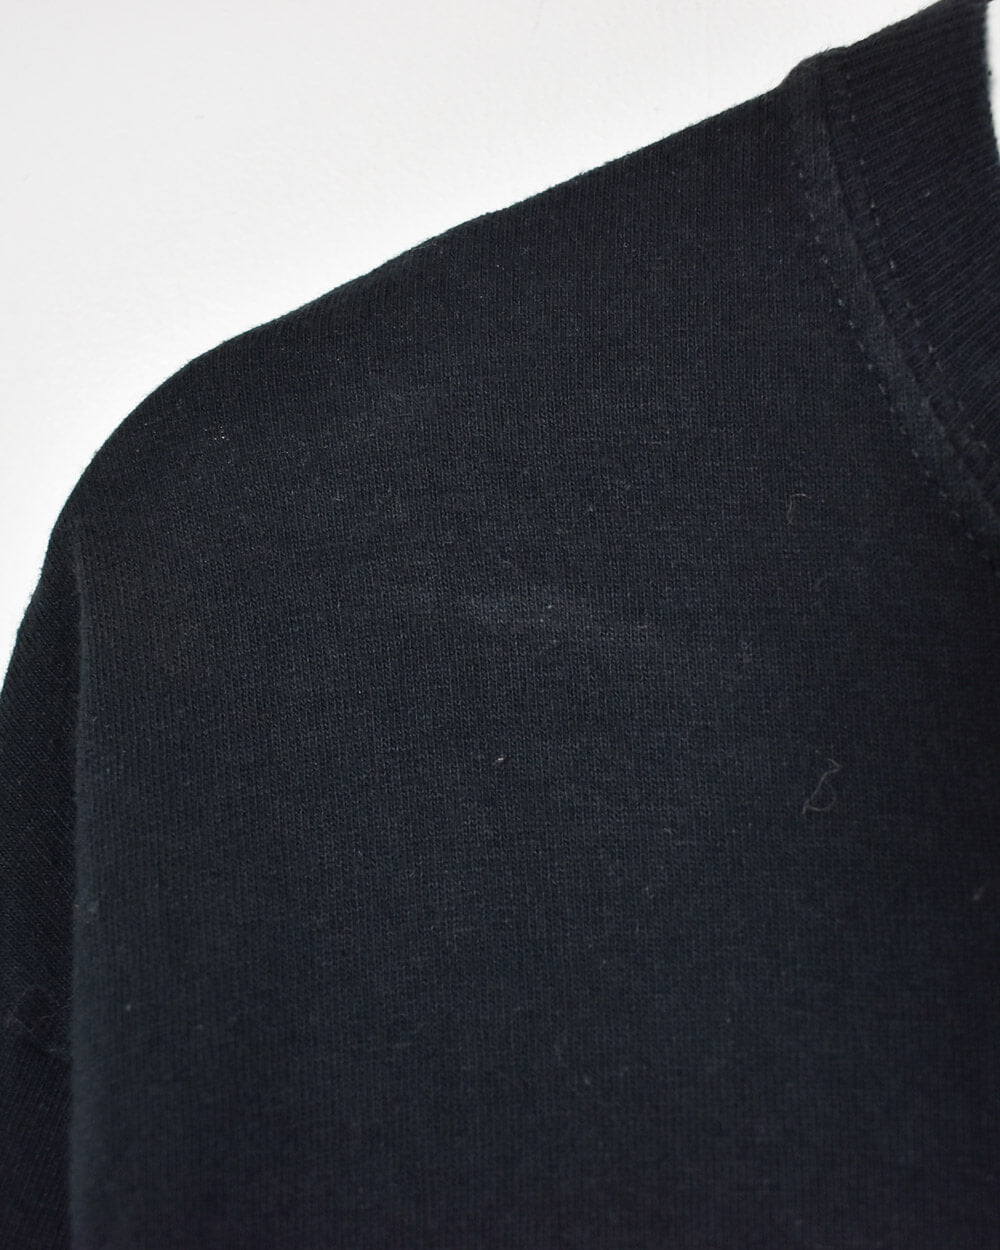 Black Thrasher Magazine San Francisco Long Sleeved T-Shirt - Medium